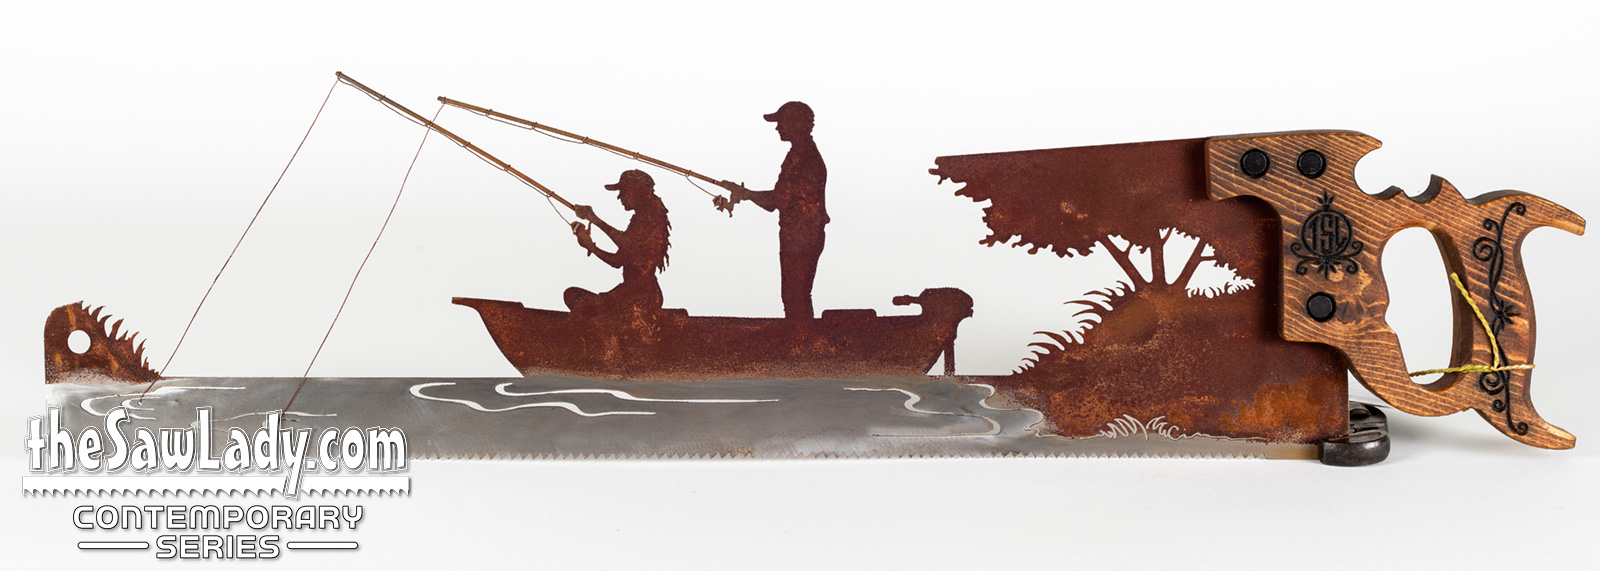 man-woman-fishing-boat-metal-wall-saw-art